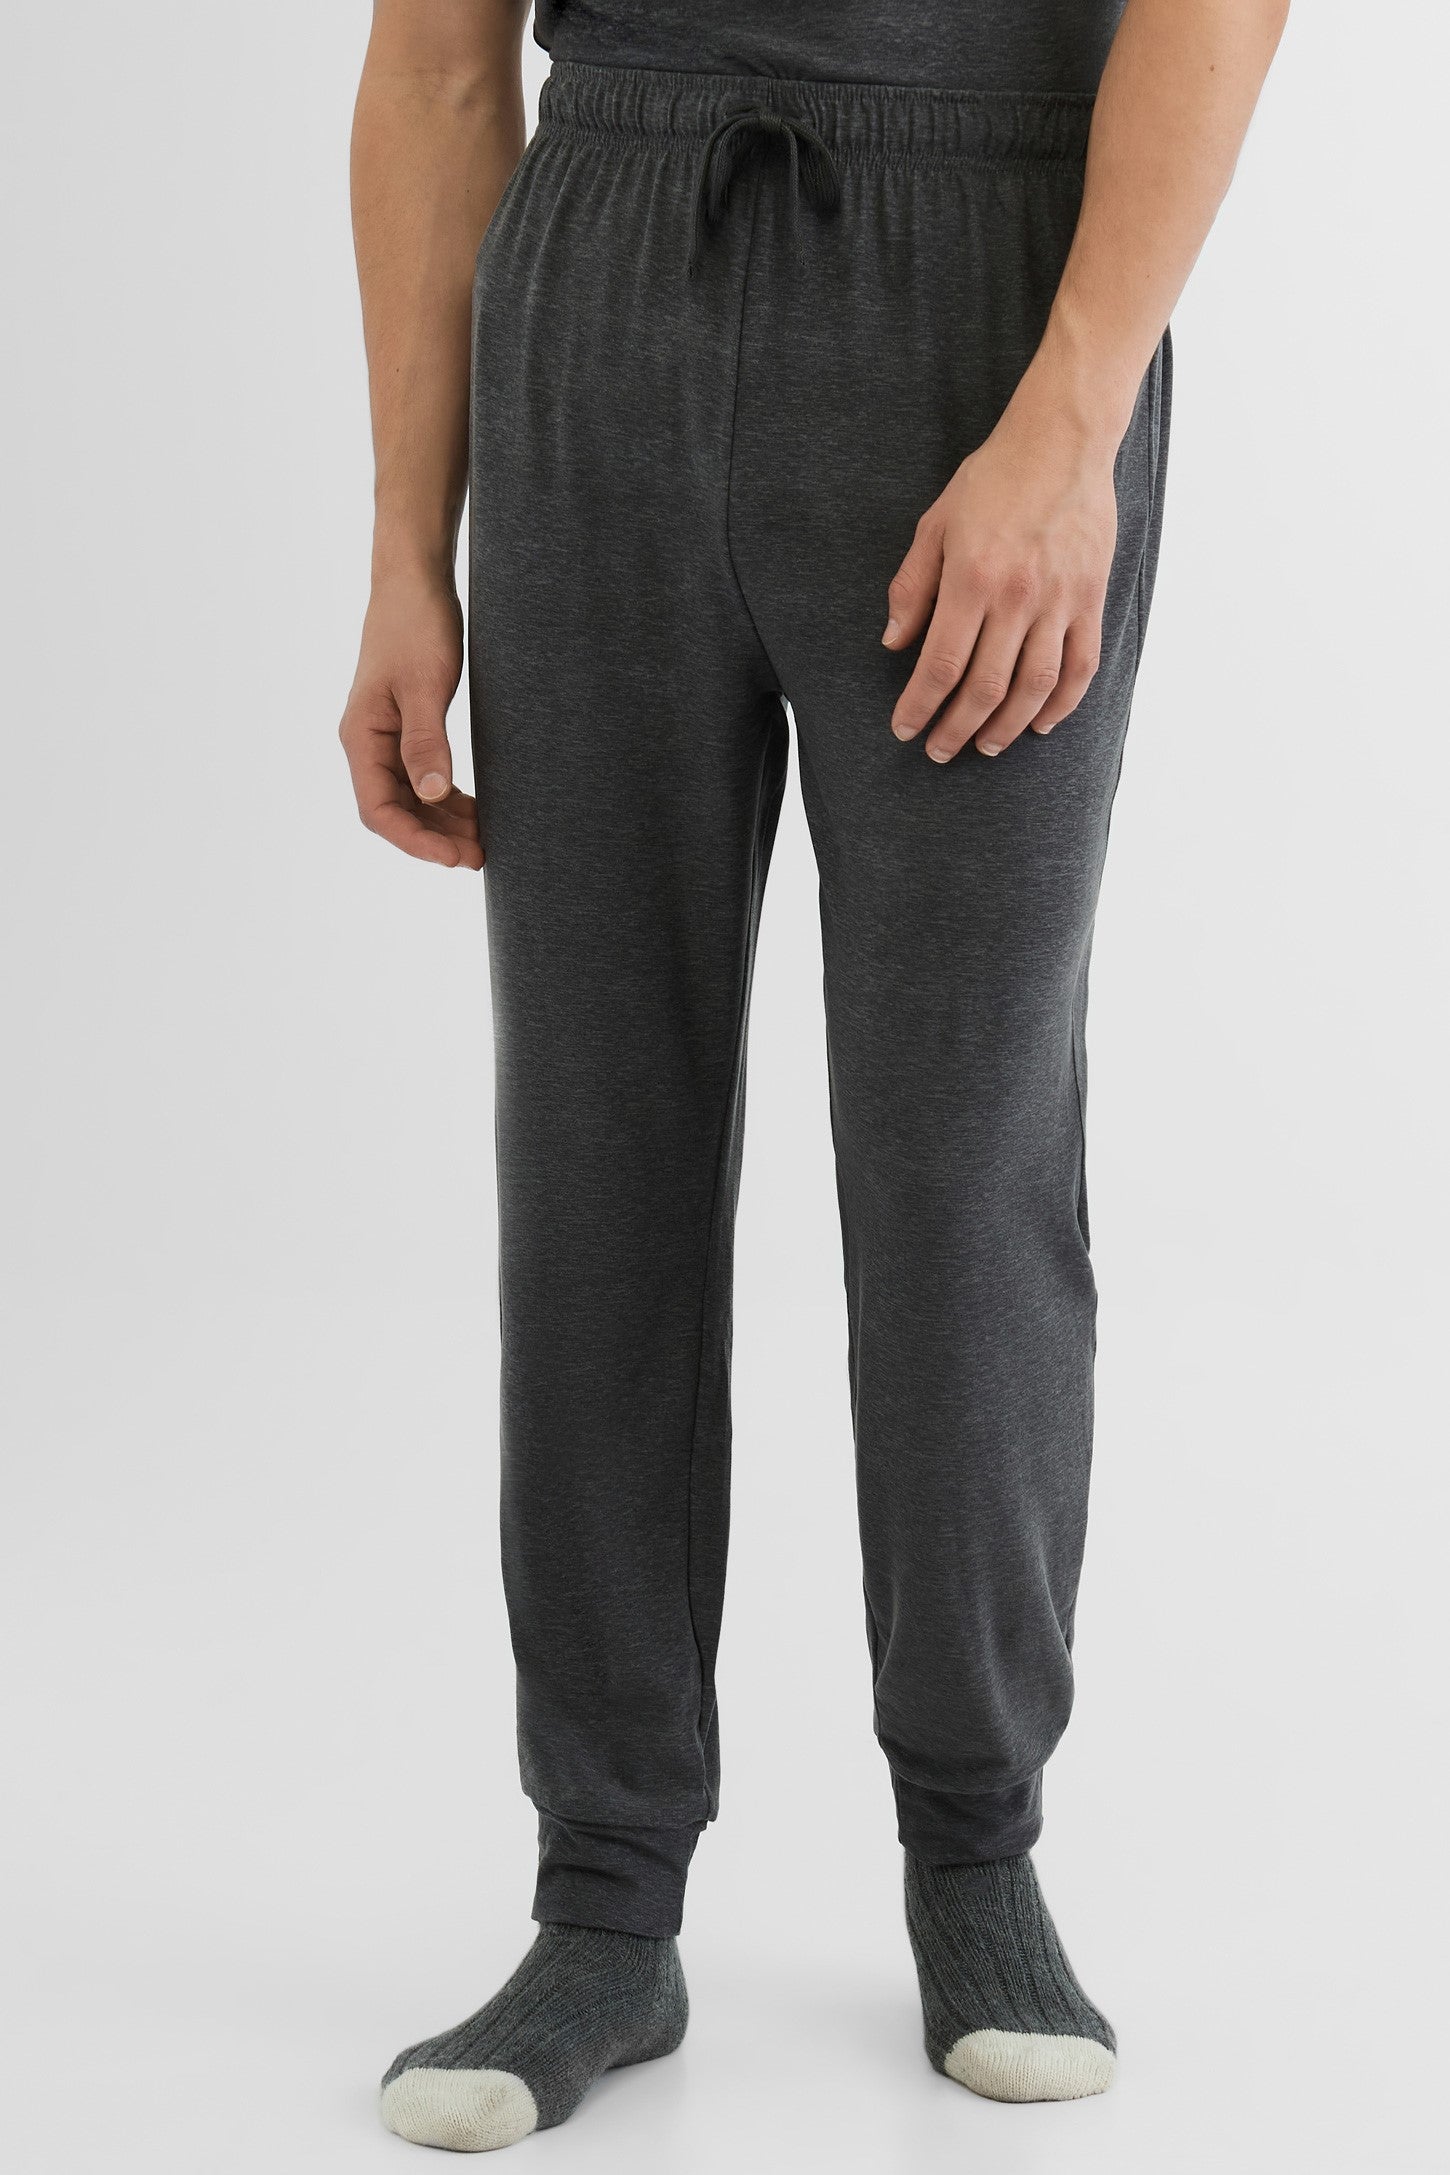 Pantalon pyjama jogger, 2/50$ - Homme && CHARBON MIXTE